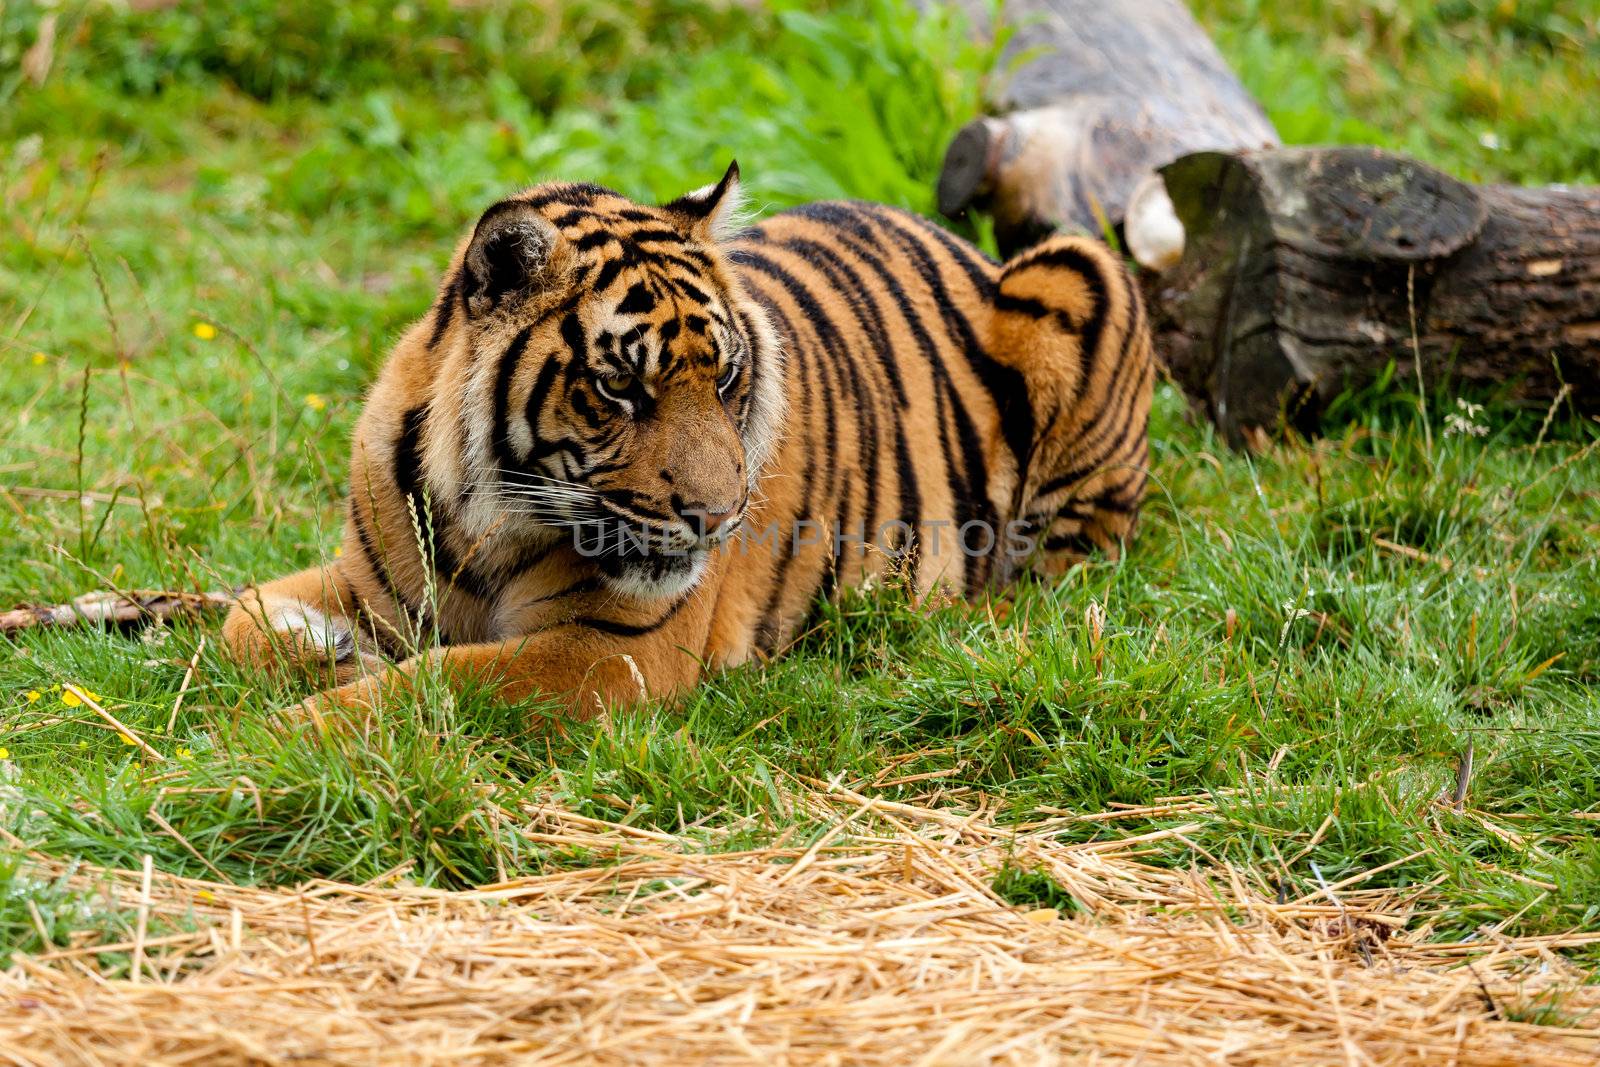 Sumatran Tiger Lying Down on the Grass by scheriton